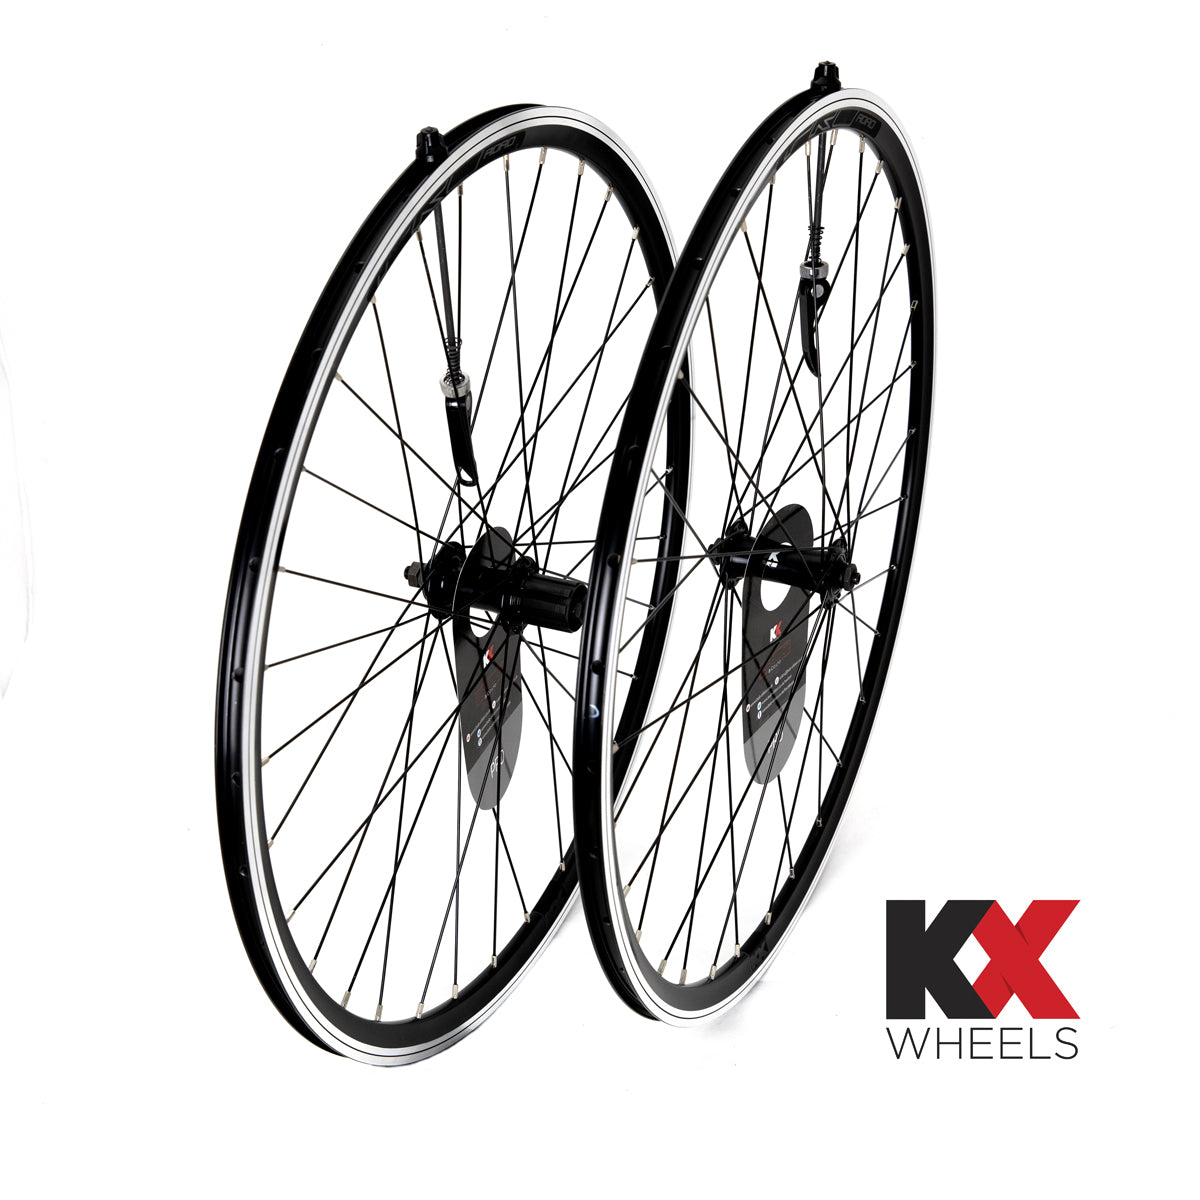 KX Pro Road 700c Q/R Sealed Bearing 8-10 Speed Wheels In Black